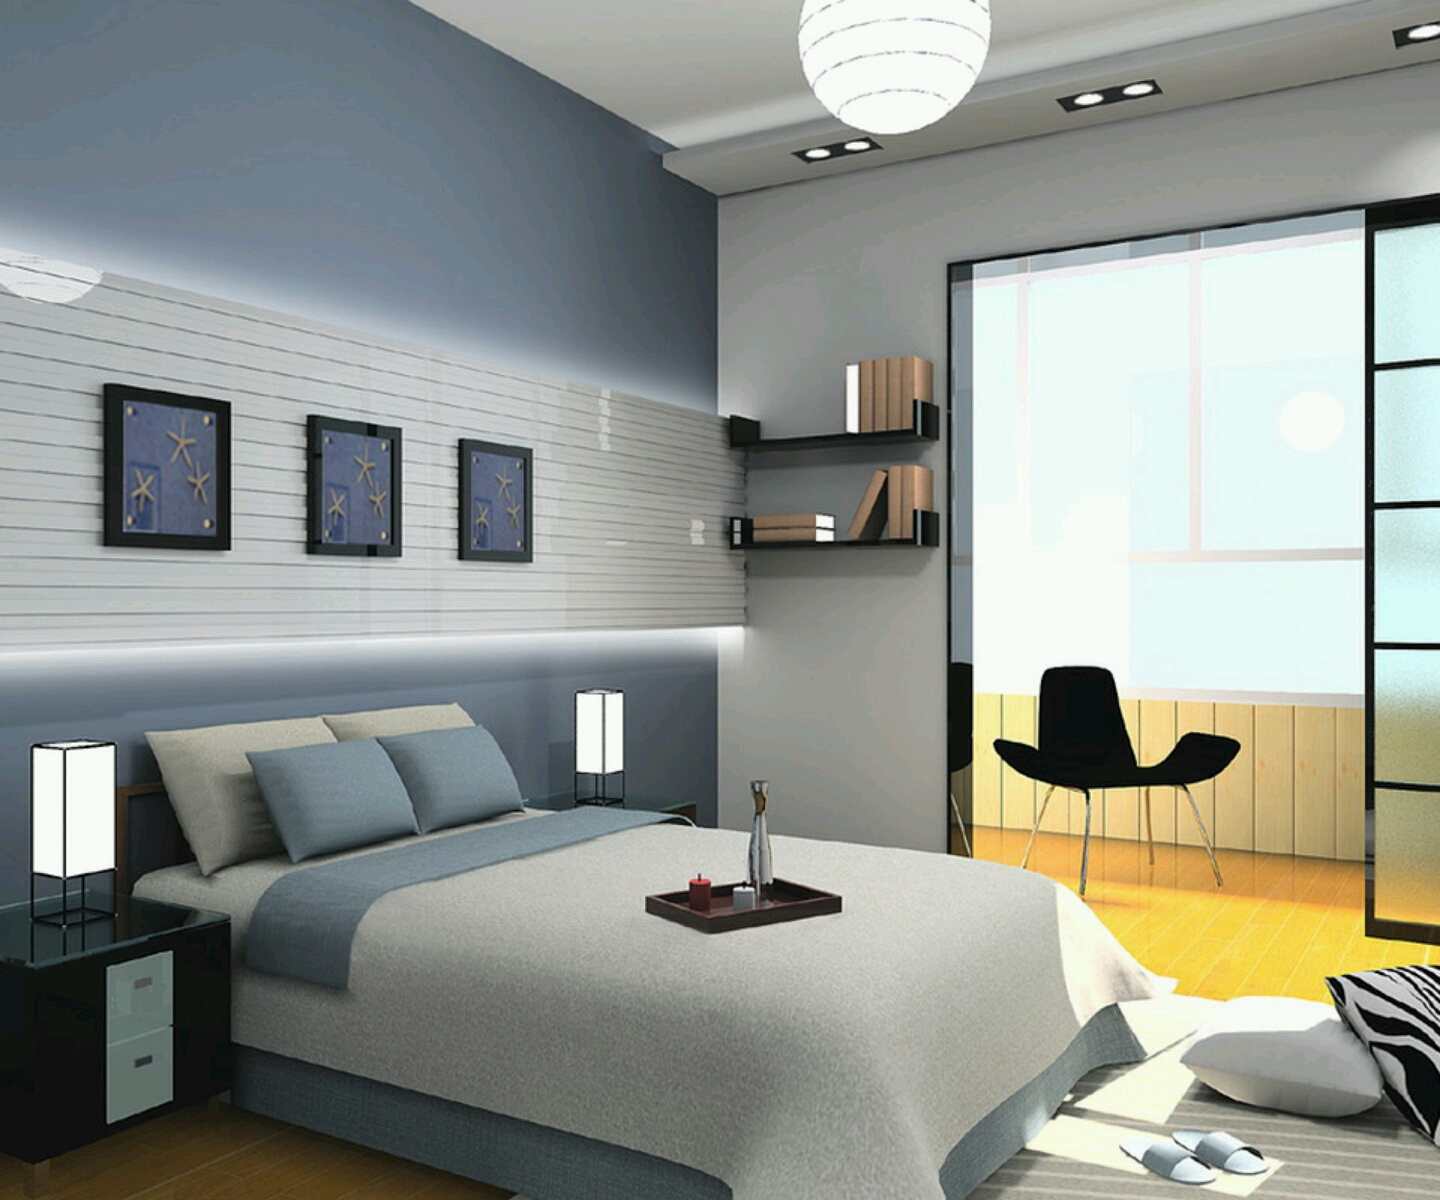 ... designs latest.: Modern homes bedrooms designs best bedrooms designs